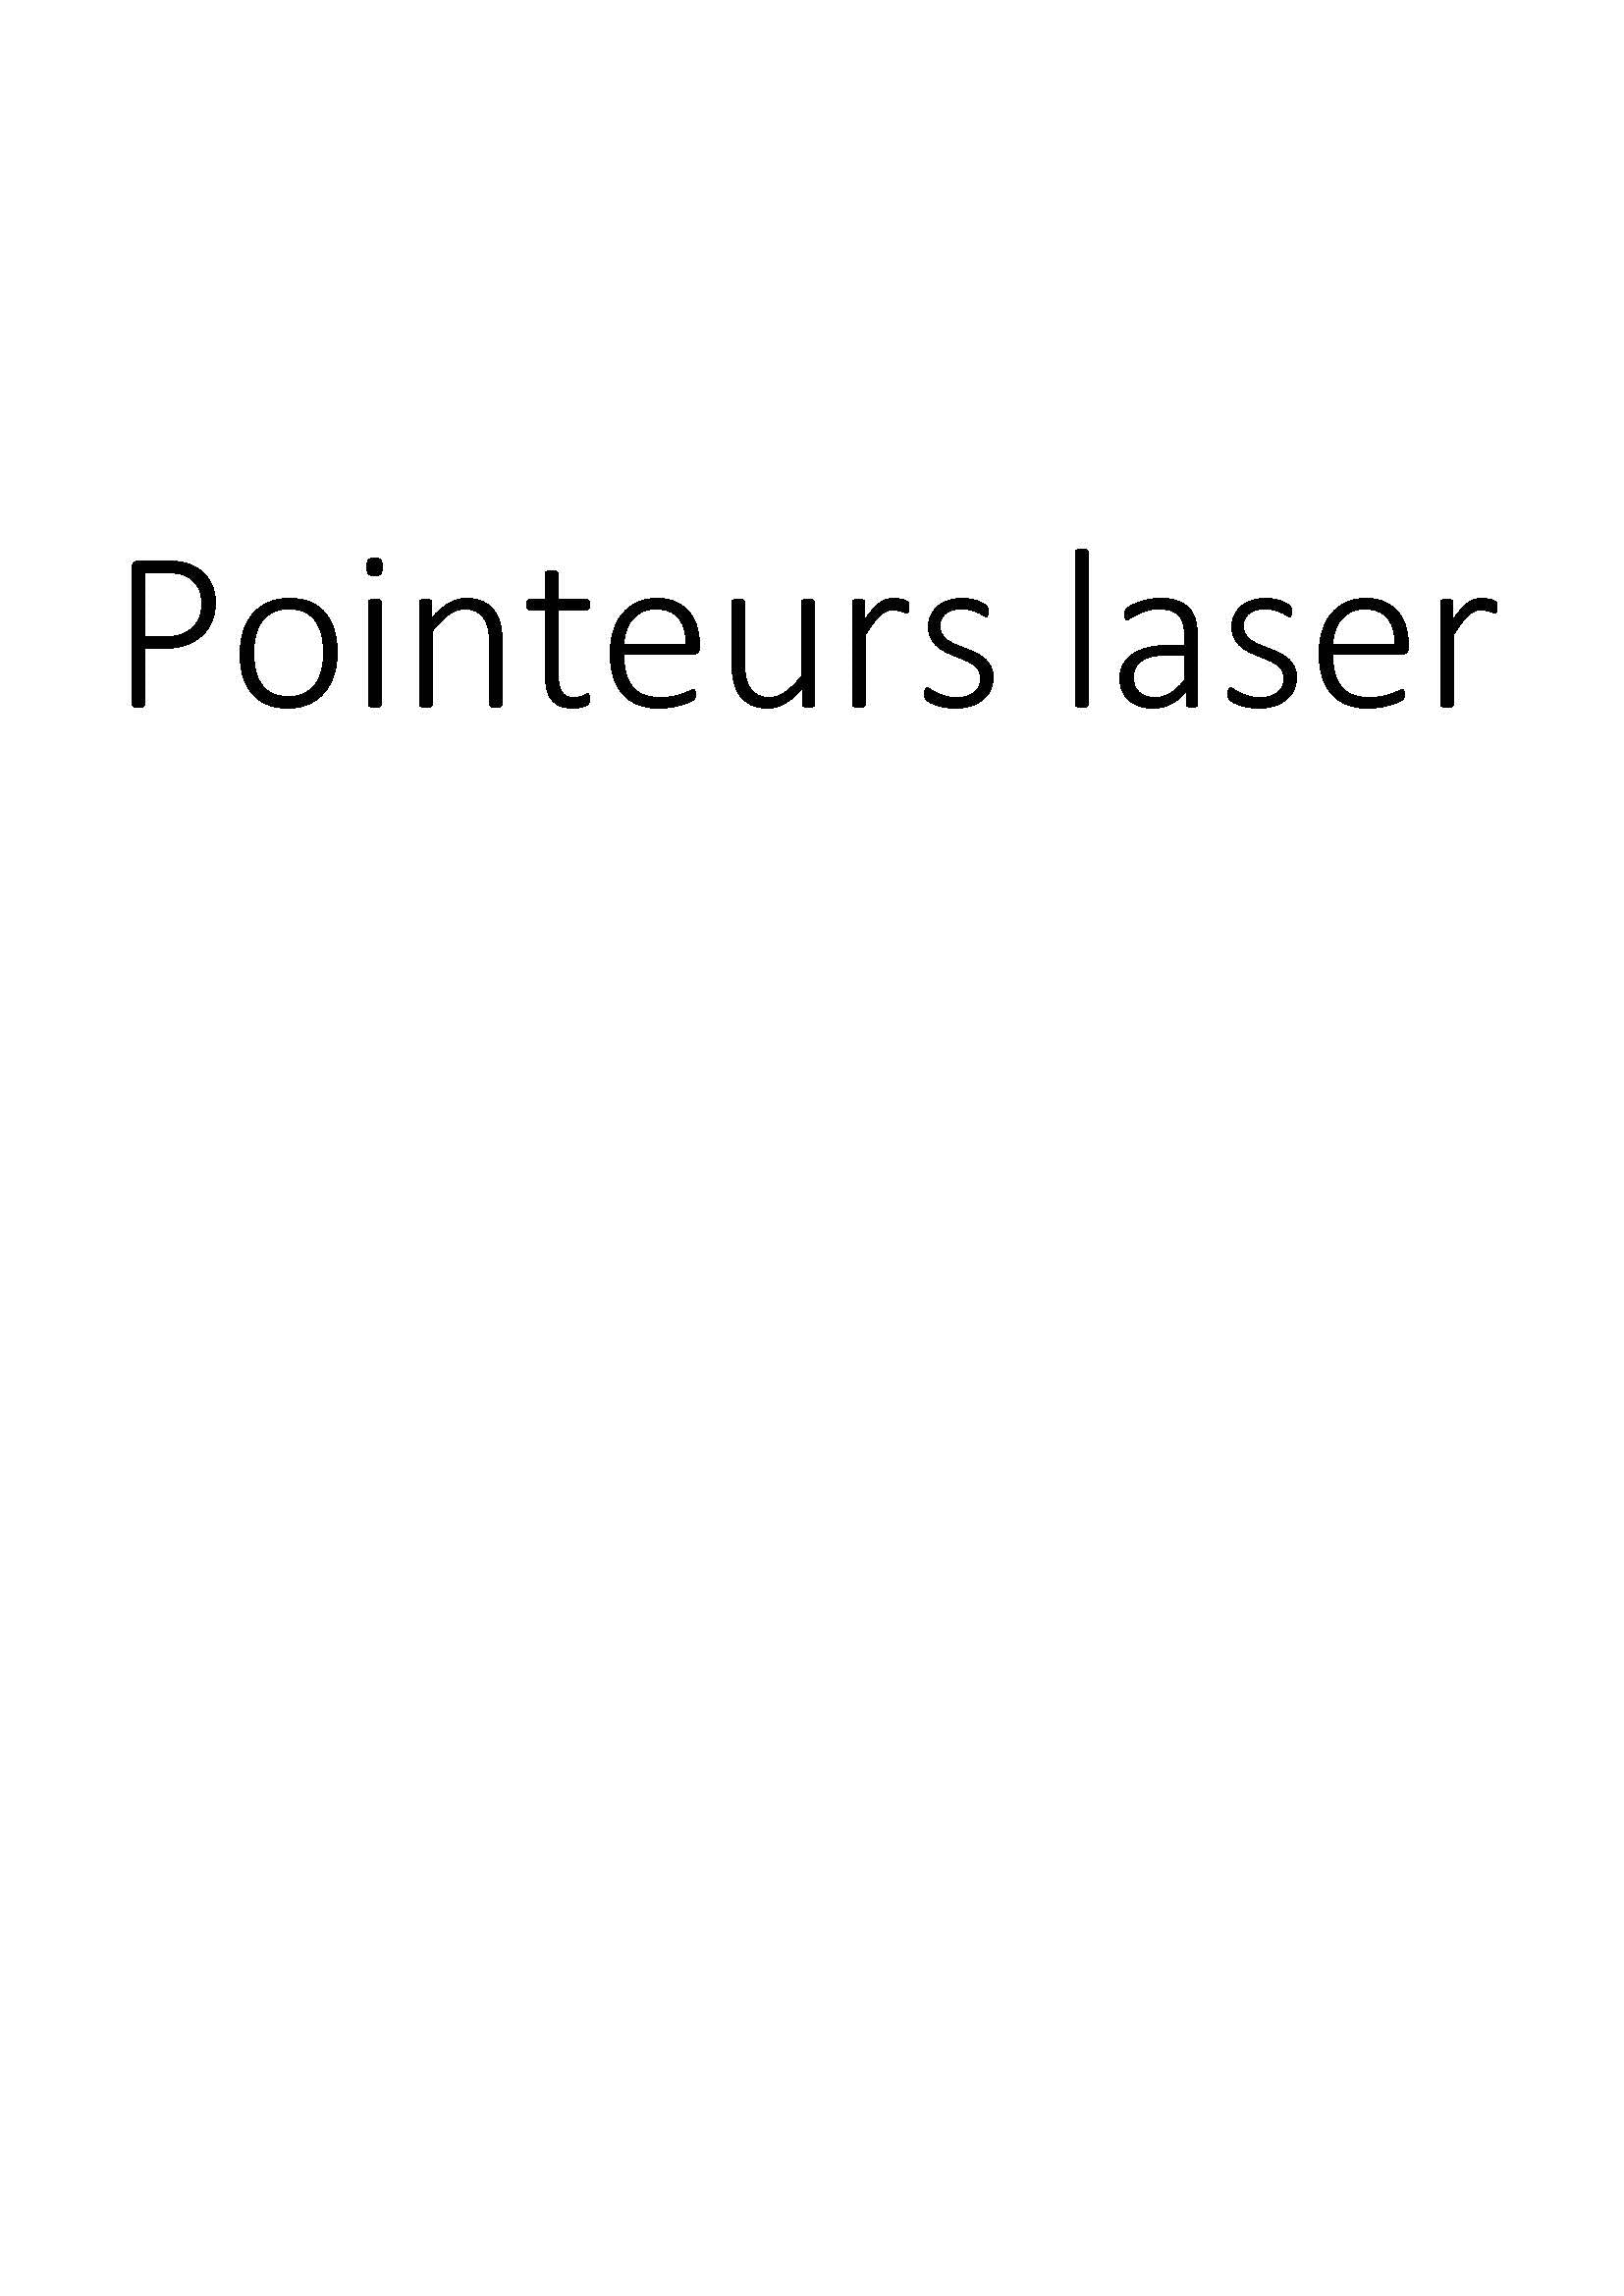 Pointeurs laser clicktofournisseur.com